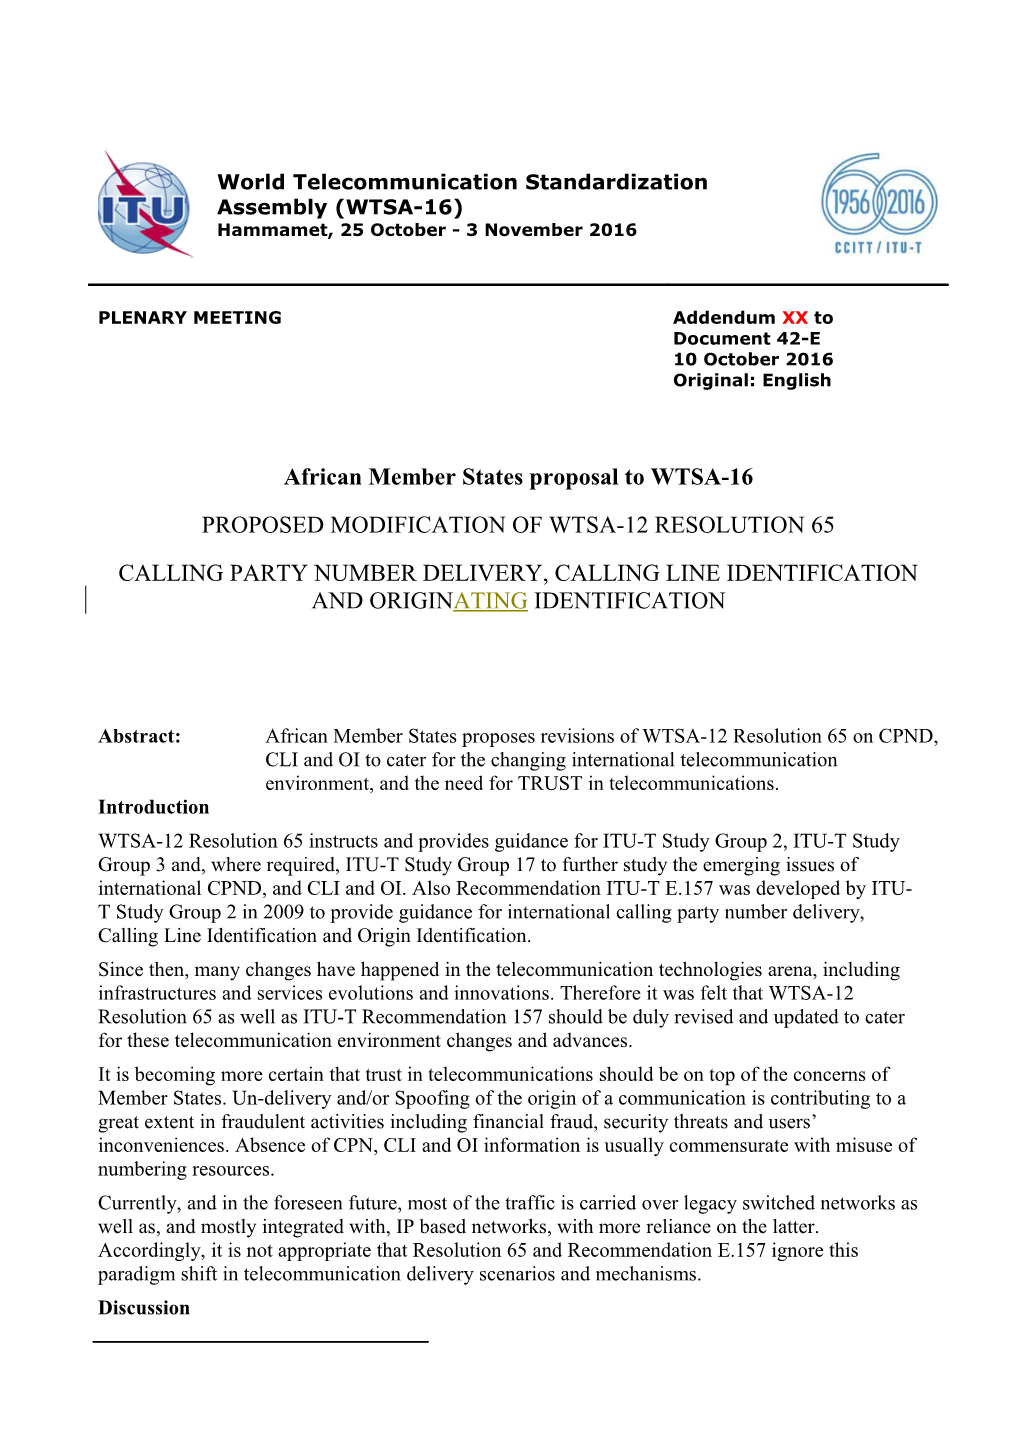 WTSA-12 Resolution 65 Instructs and Provides Guidance for ITU-T Study Group 2, ITU-T Study